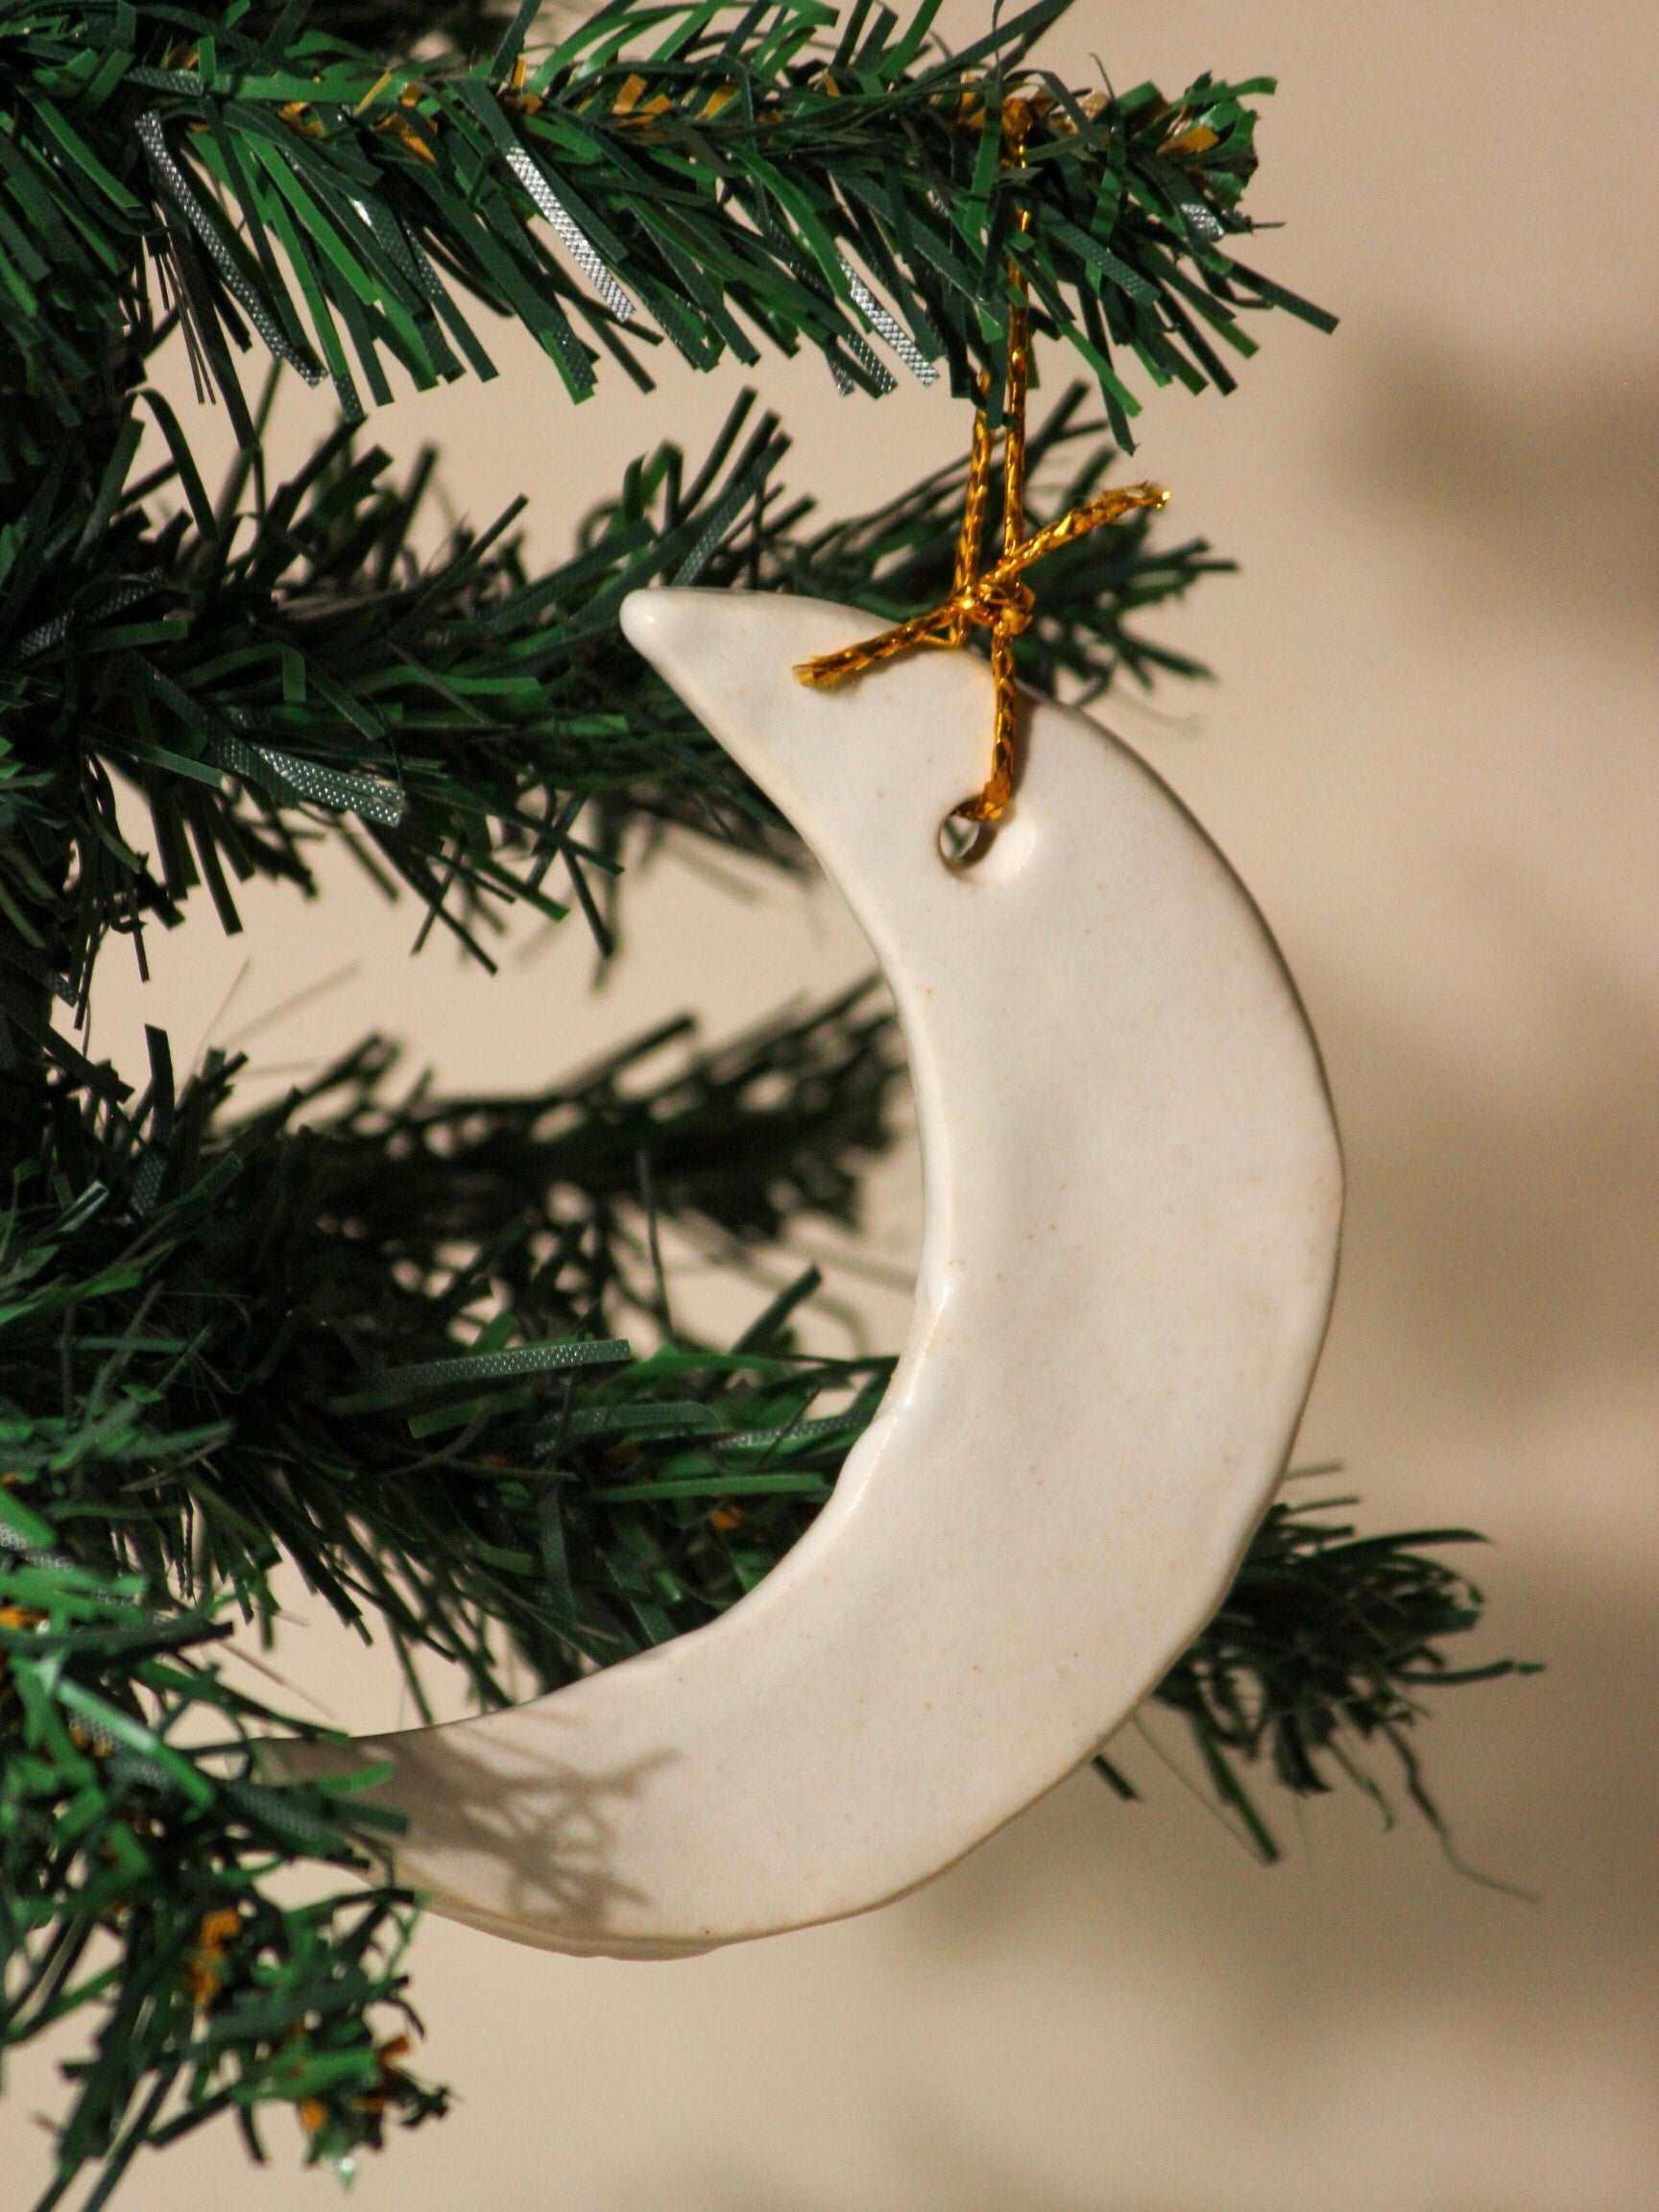 Ceramic Christmas Tree Ornaments, (set of 10) & (set of 5)